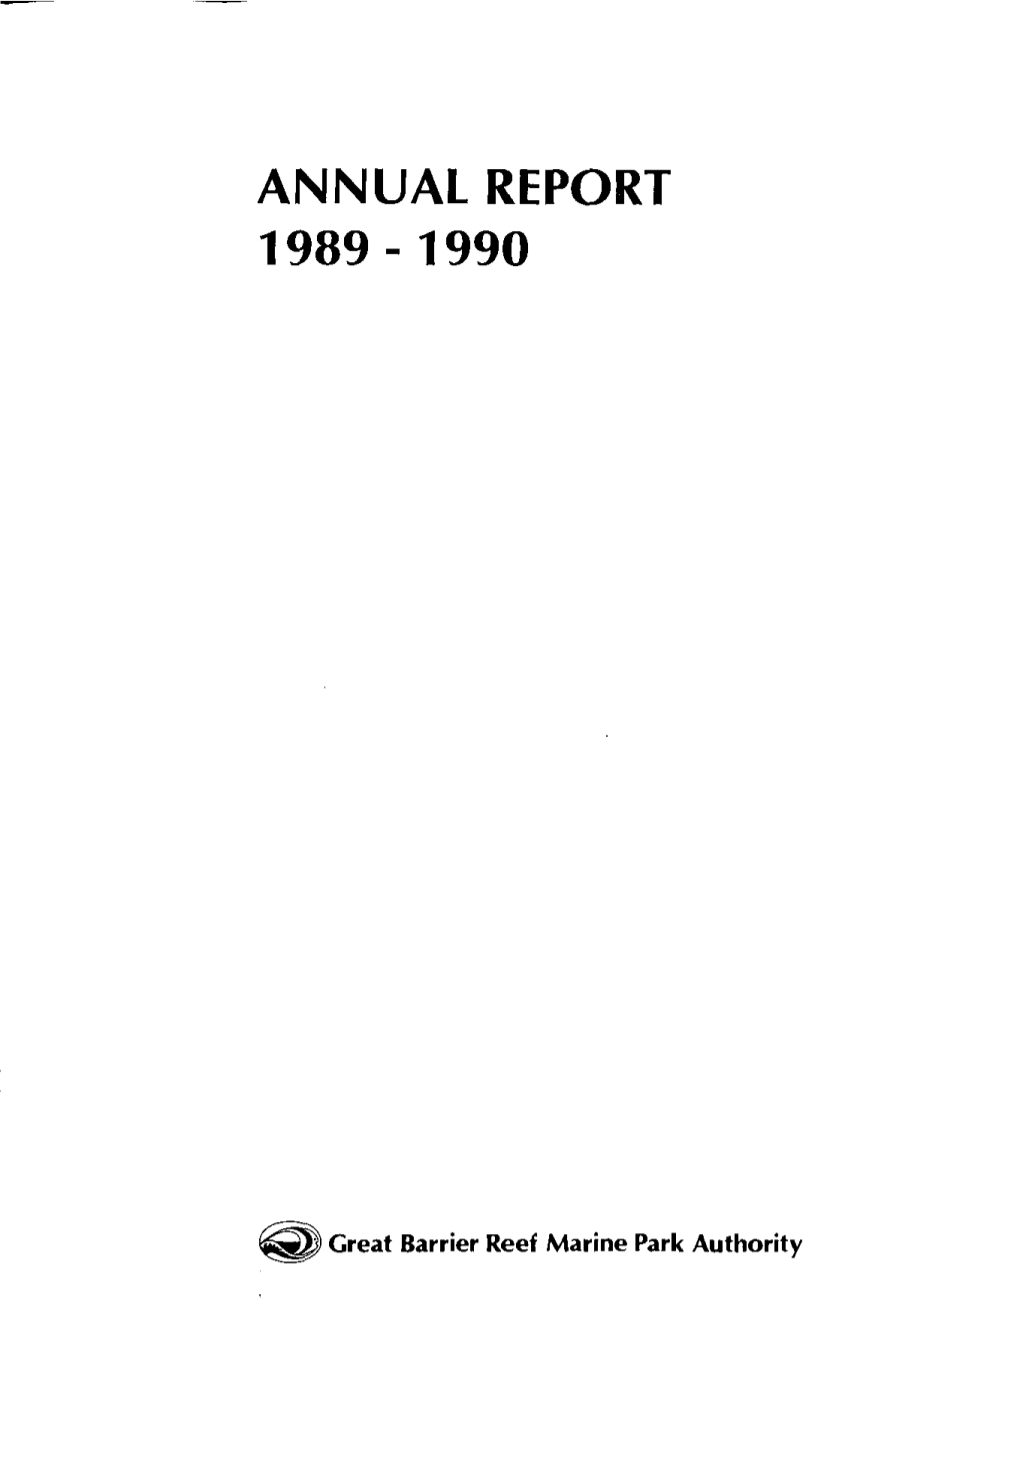 Annual Report 1989 - 1990